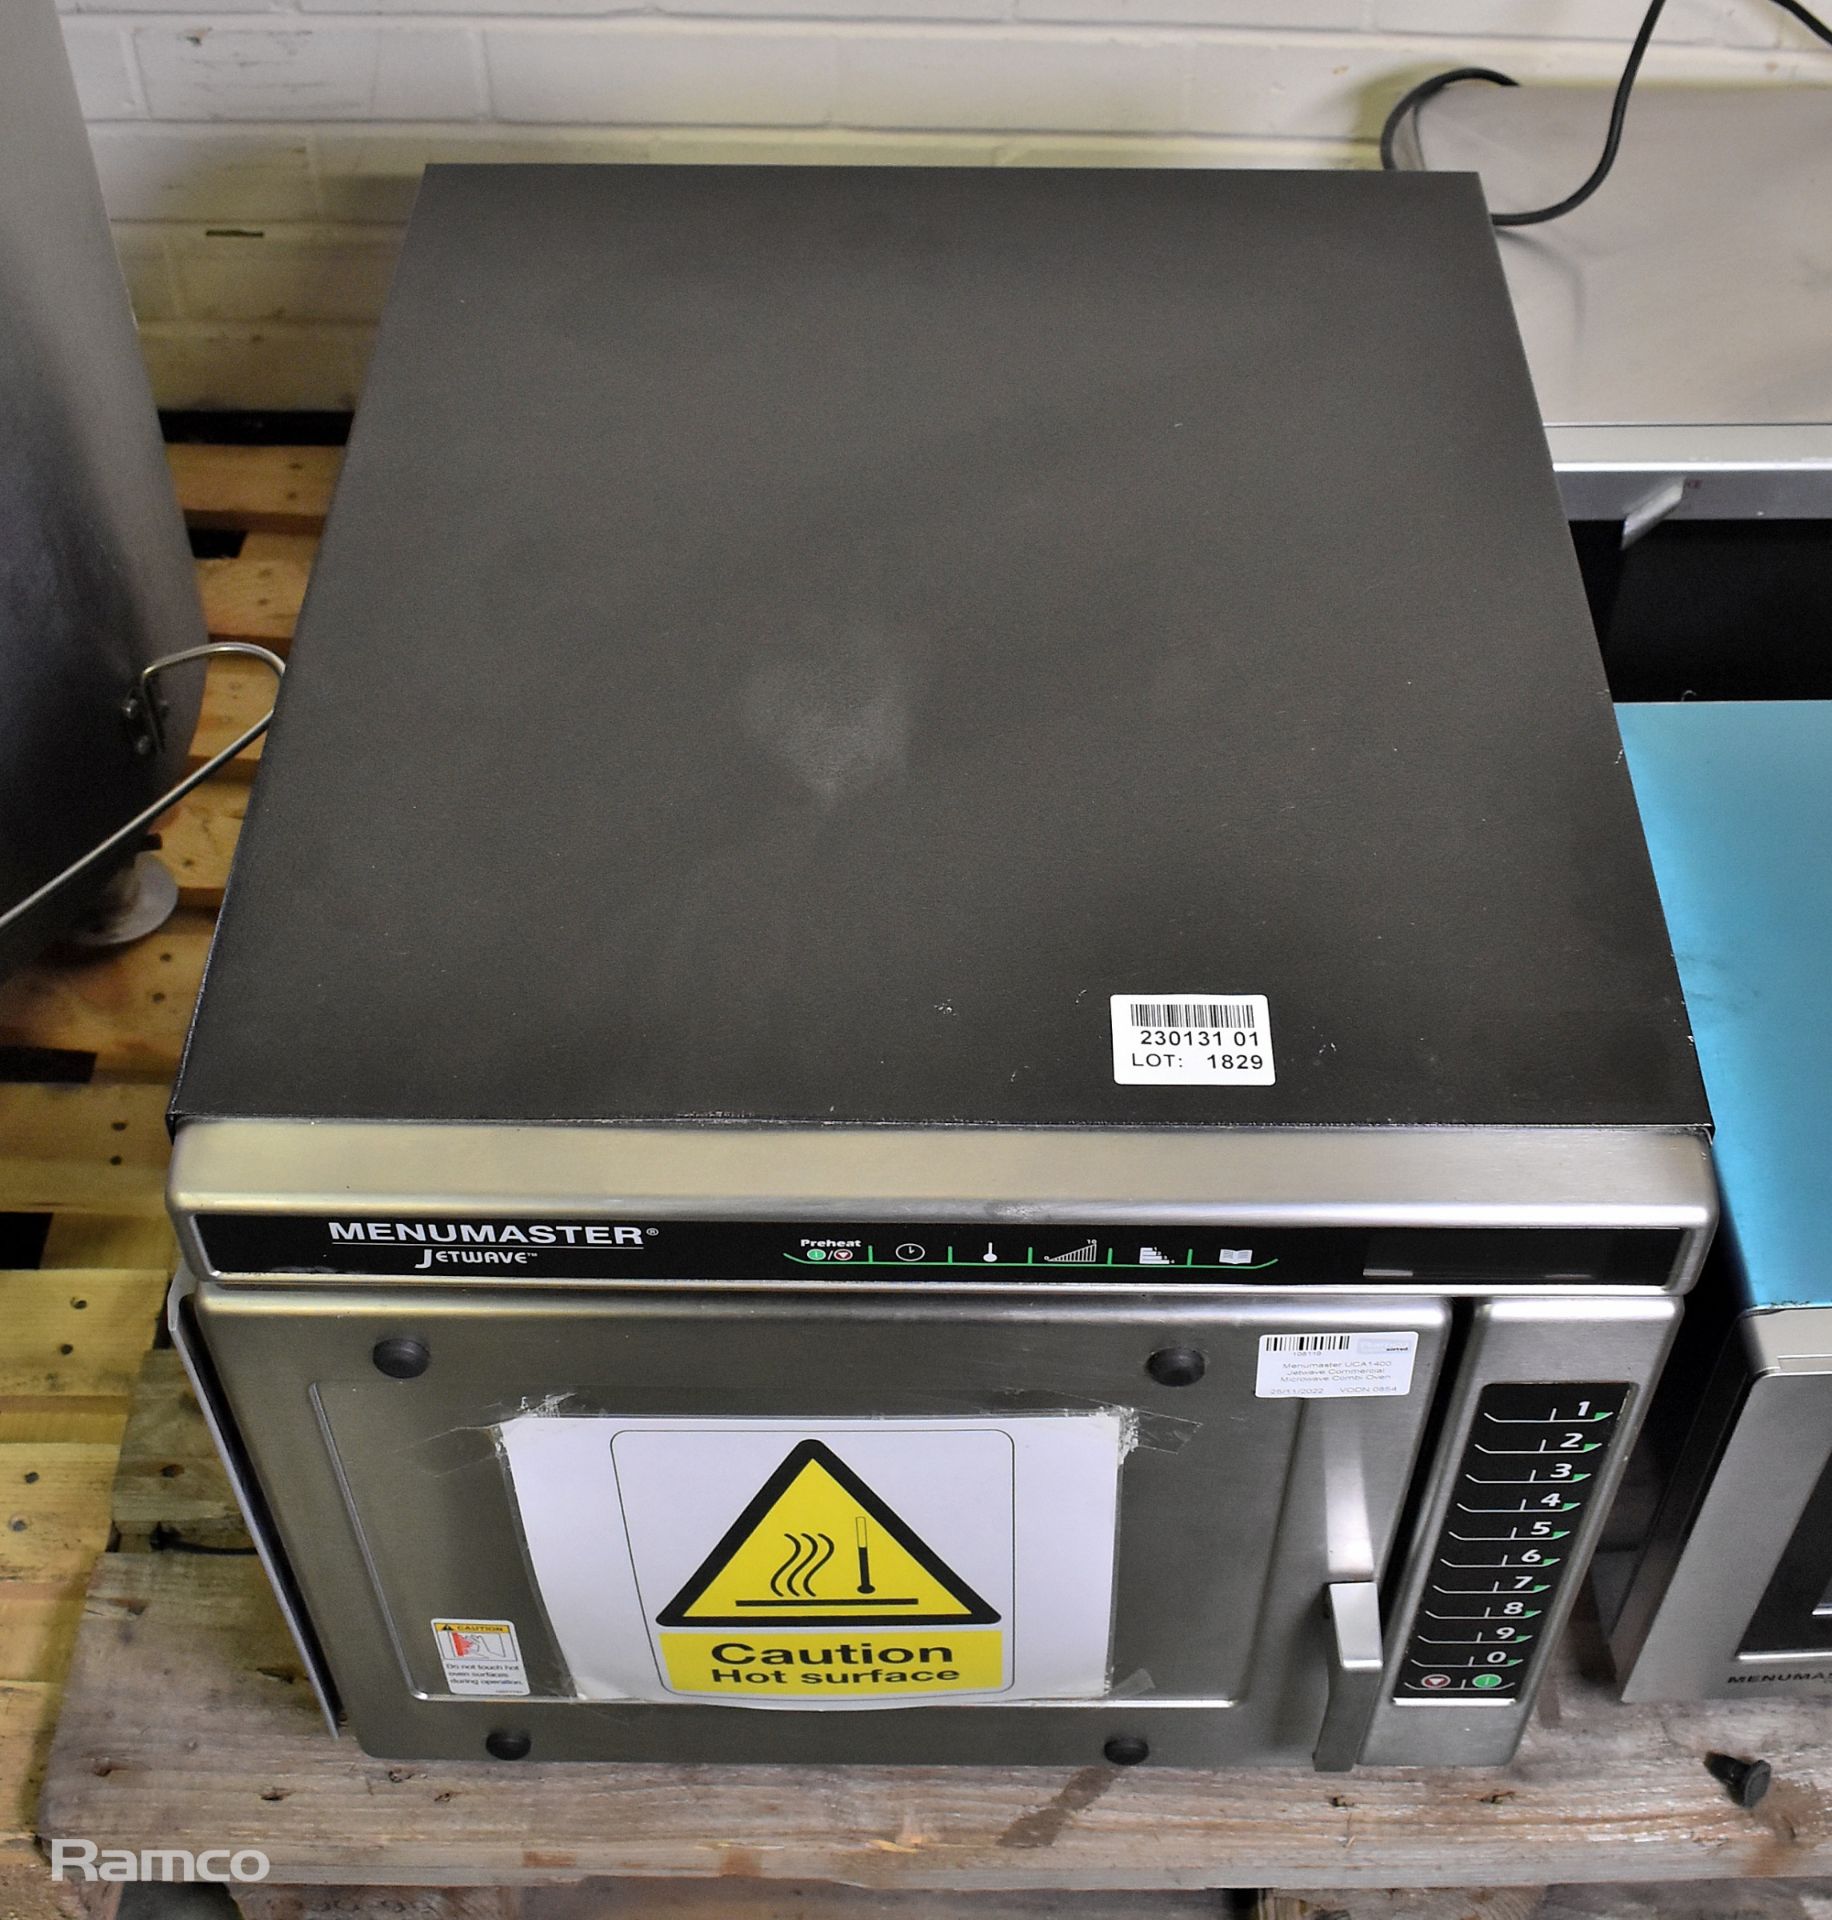 Menumaster UCA1400 Jetwave Commercial Microwave Combi Oven - Image 4 of 4